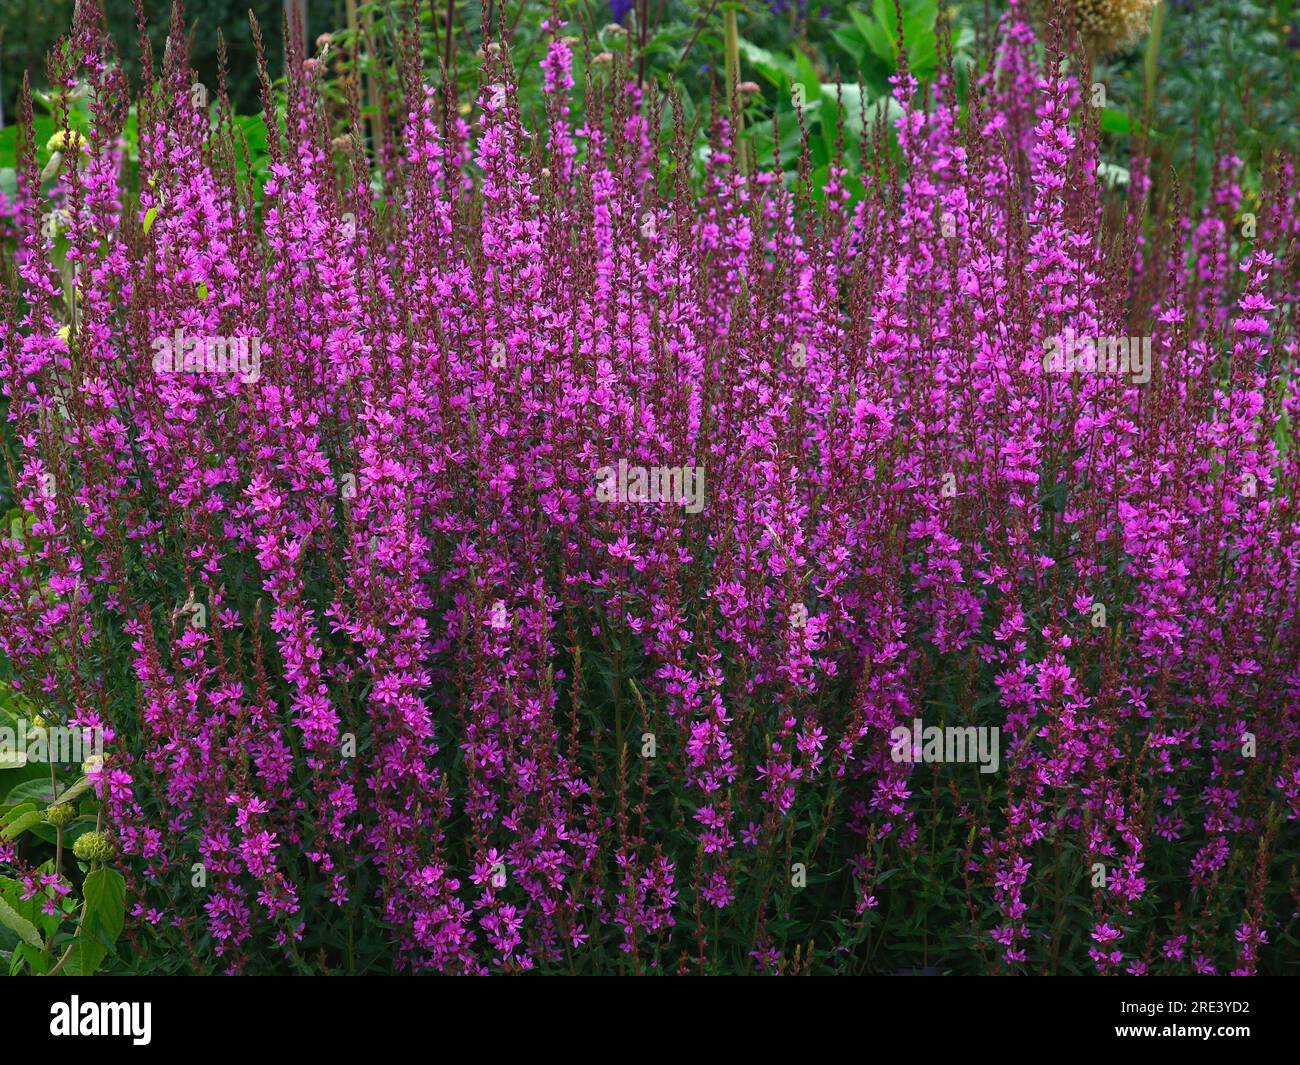 Closeup of the purple flowering herbaceous perennial garden plant lythrum virgatum dropmore purple or Loosestrife. Stock Photo